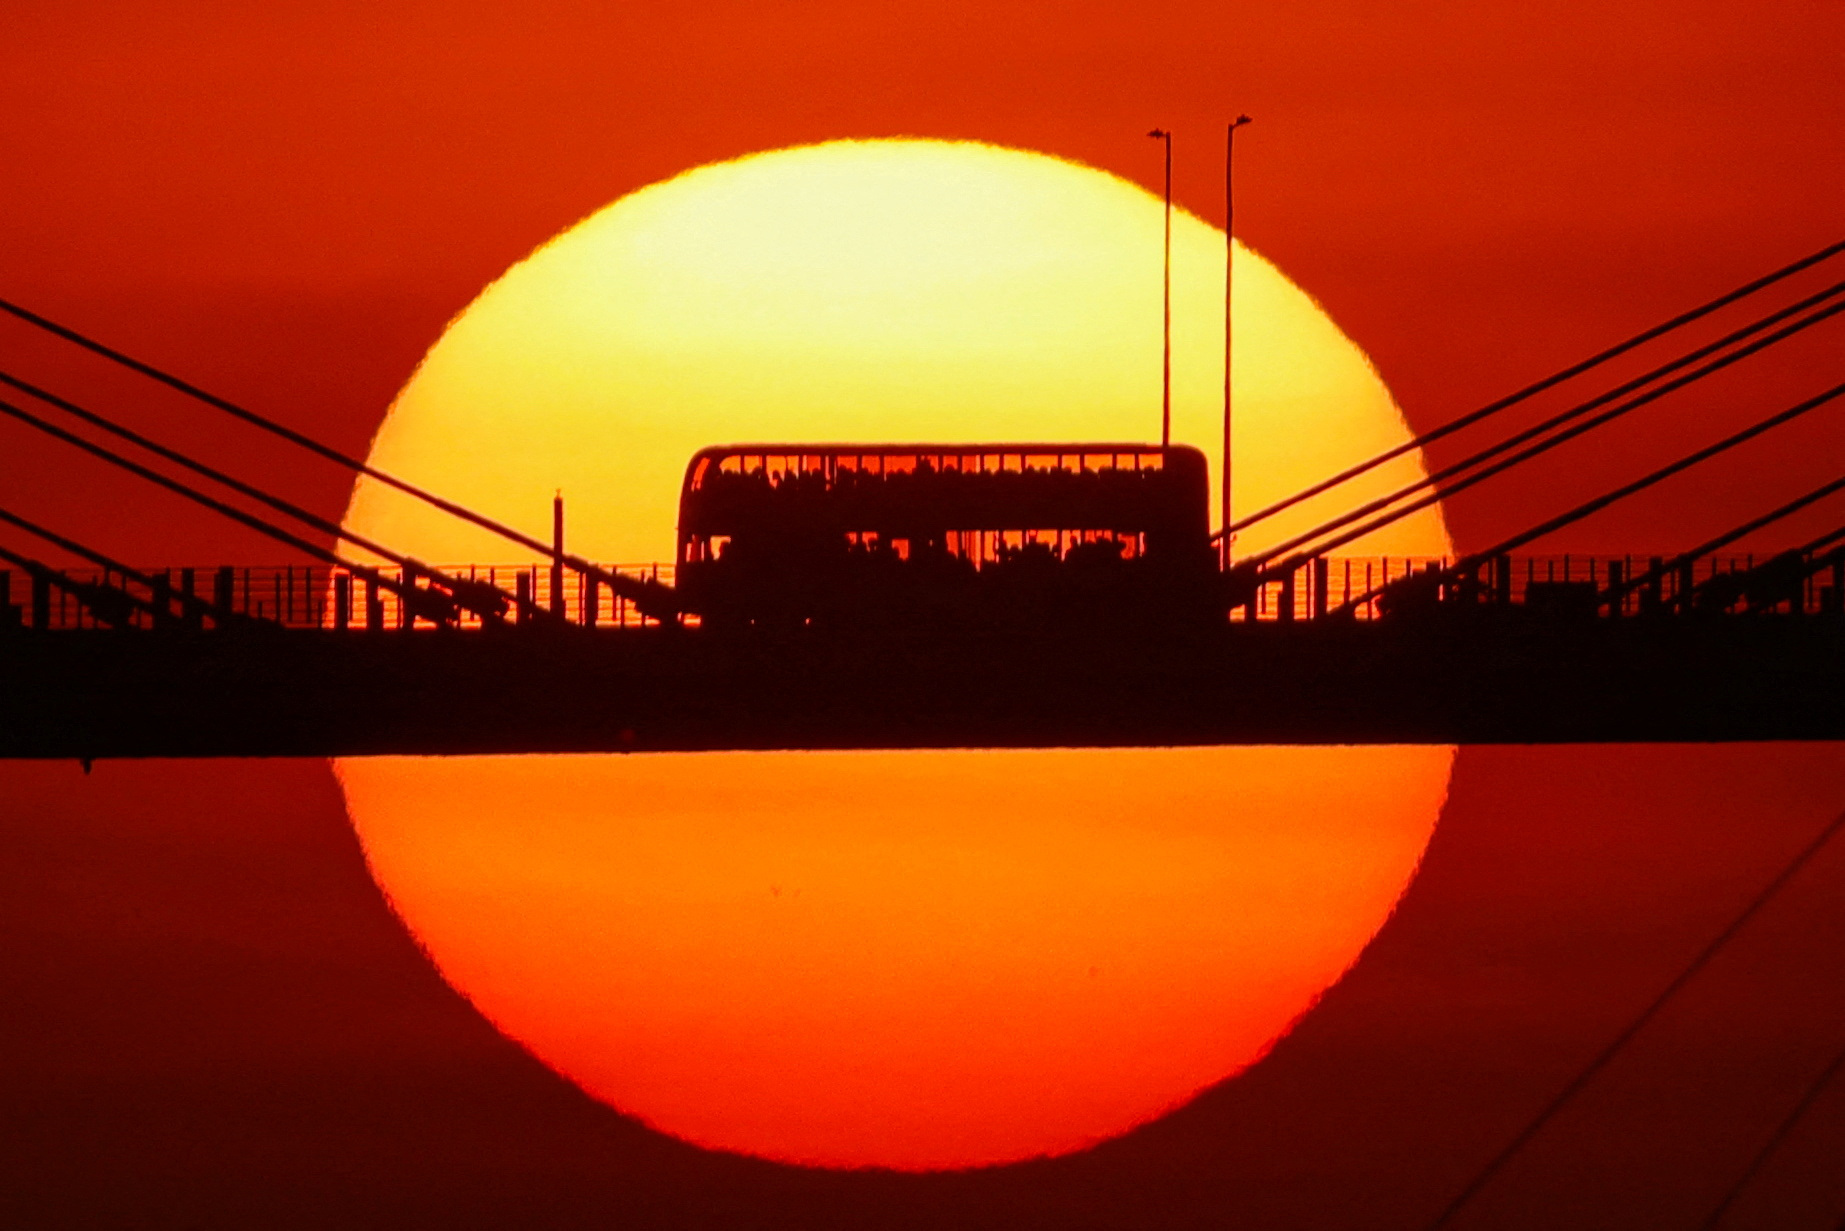 A double-decker bus passes through Ting Kau Bridge at sunset in Hong Kong